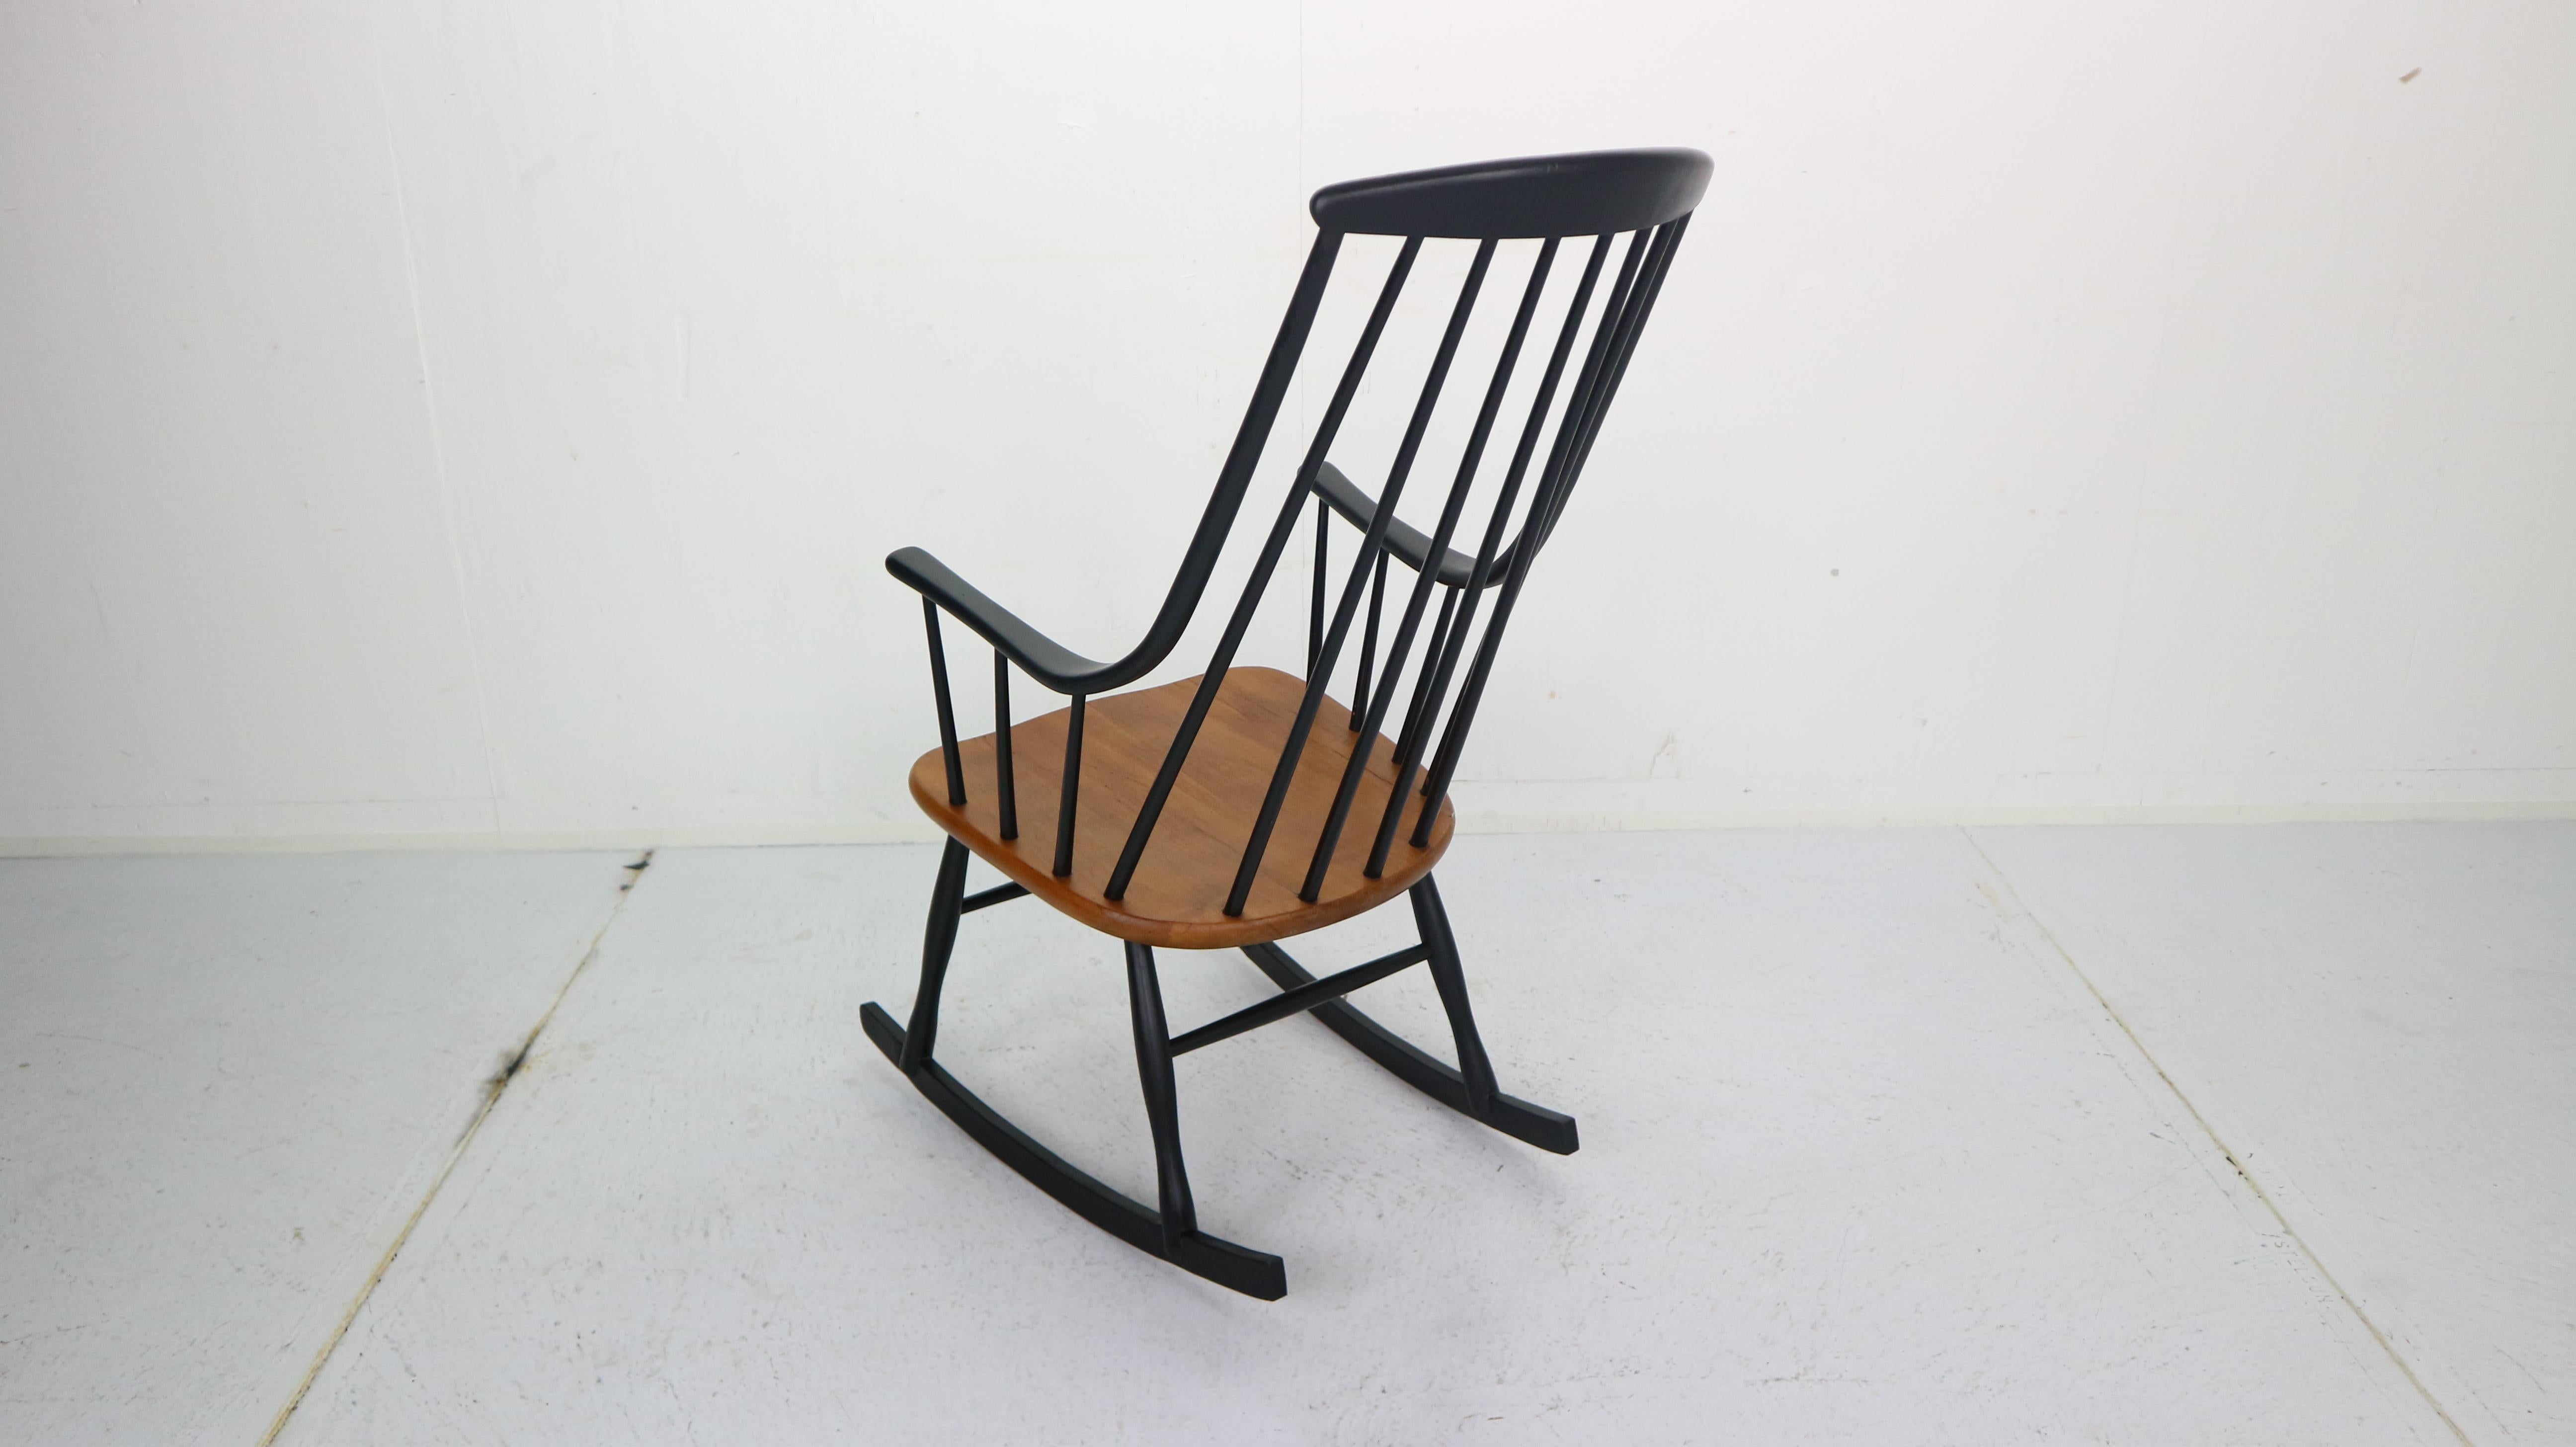 Teak ‘Grandessa’ Wooden Rocking Chair by Lena Larsson For Nesto, 1960s